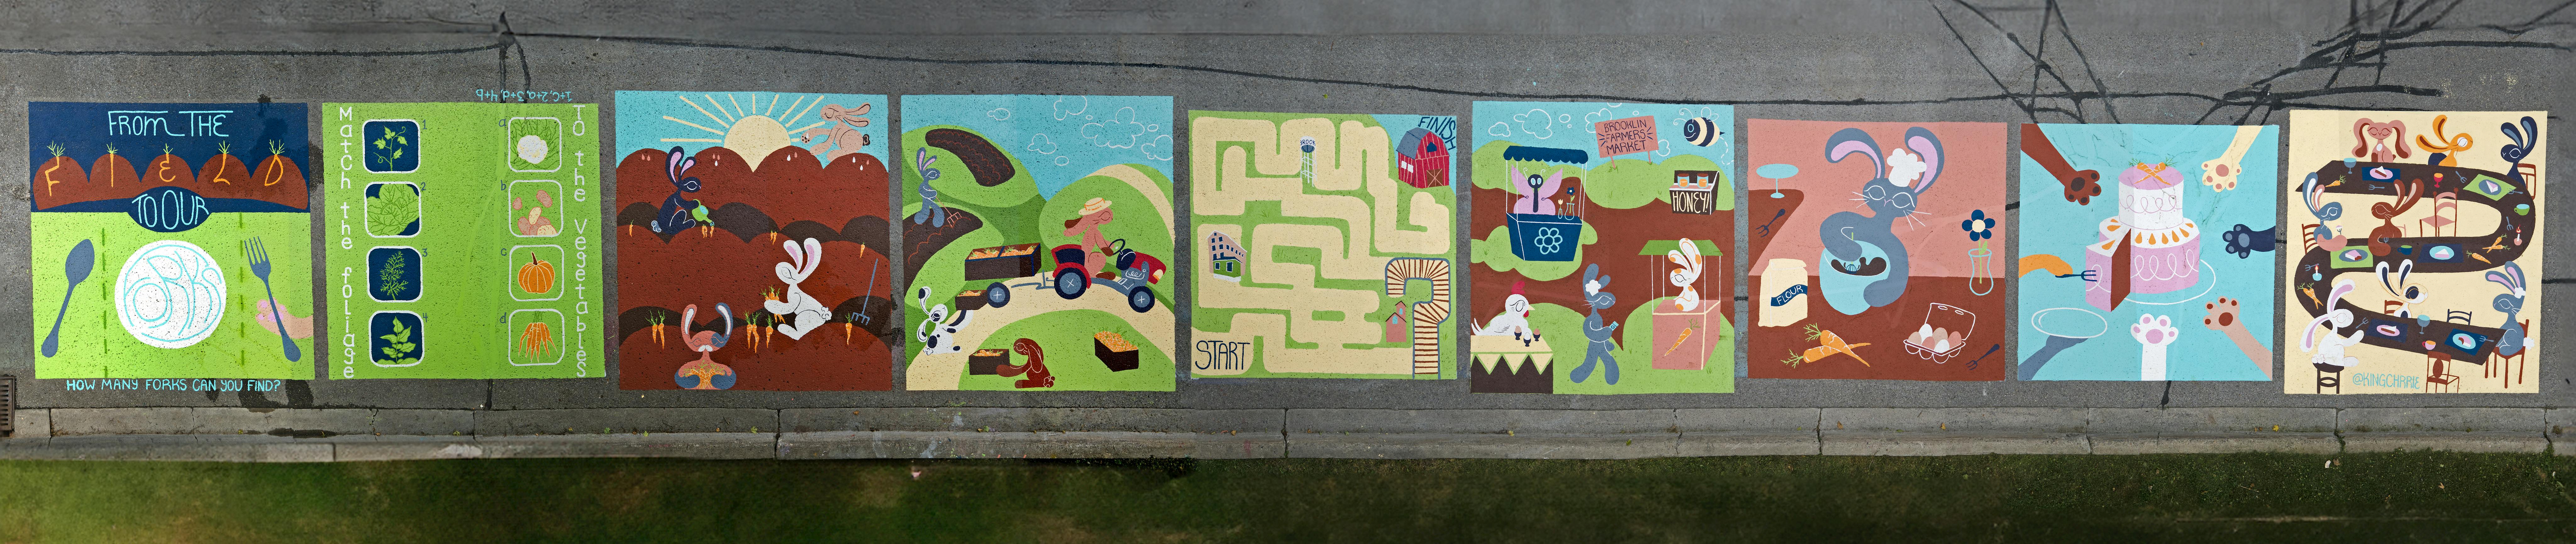 Roebuck Street Road Mural - theme 'Field to Fork'